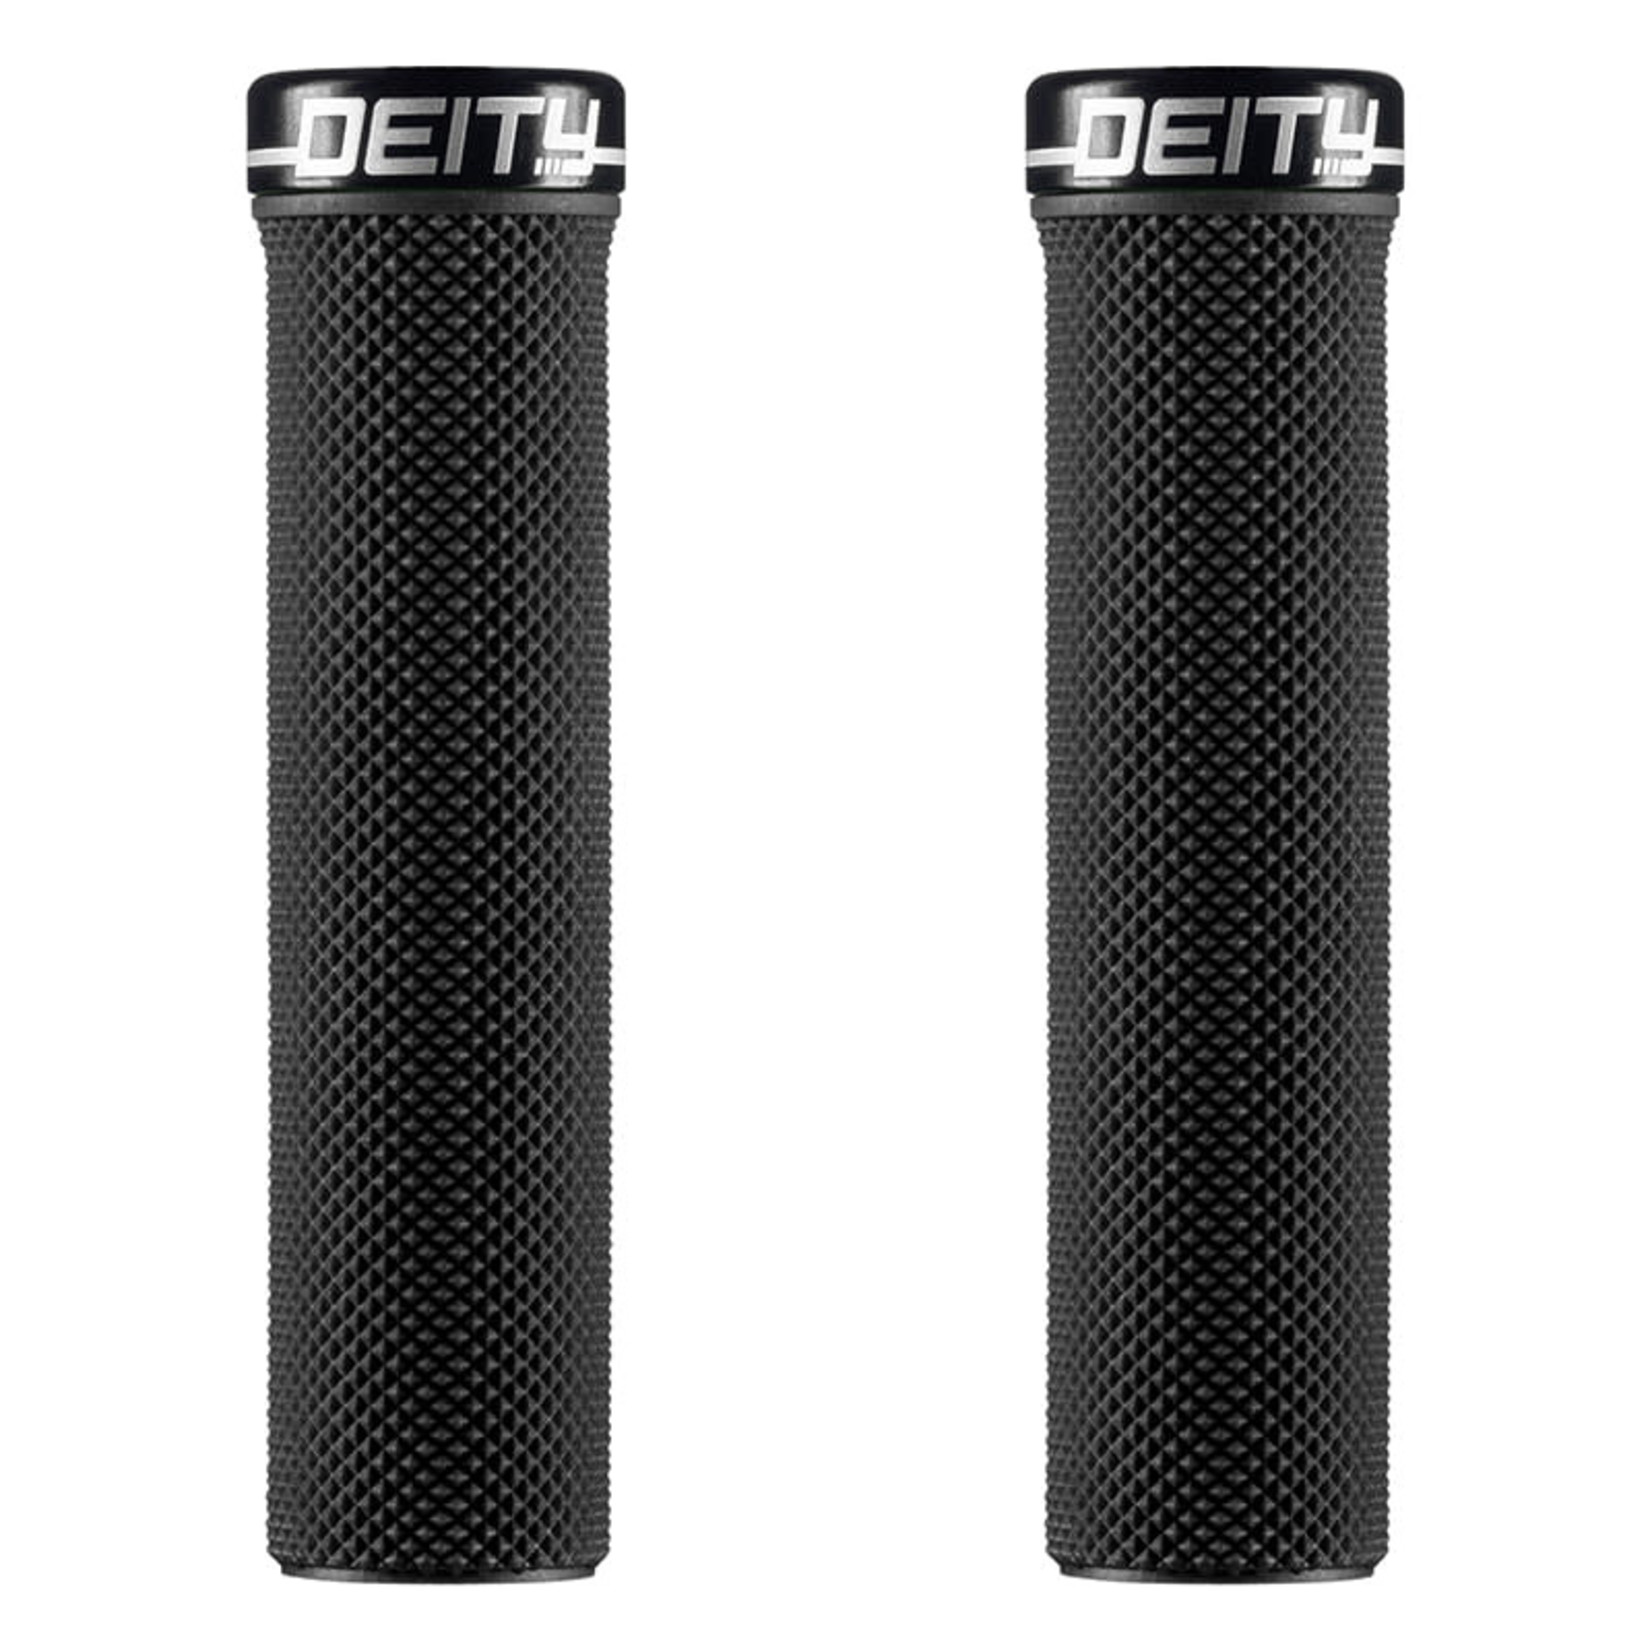 Deity DEITY, Slimfit, Grips, 132mm, Black